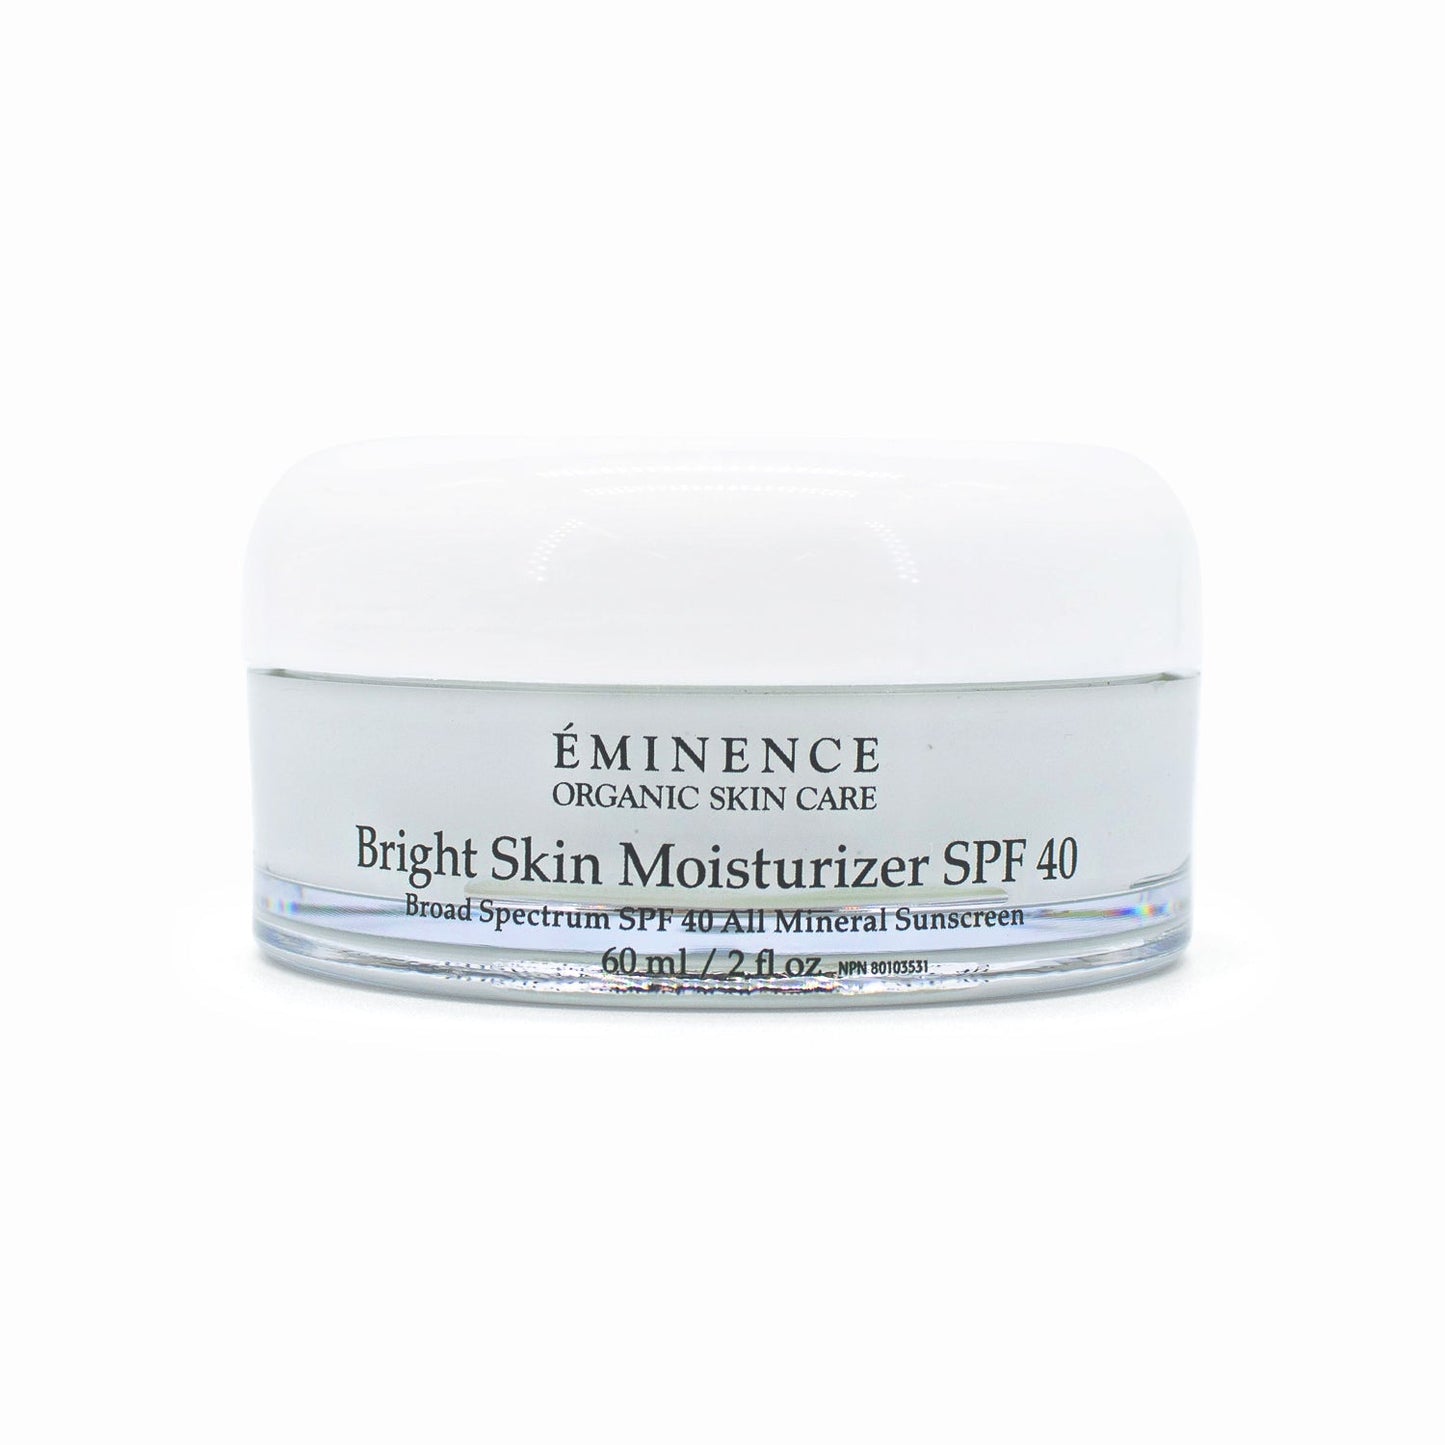 EMINENCE ORGANIC Bright Skin Moisturizer SPF 40 2oz - Imperfect Box